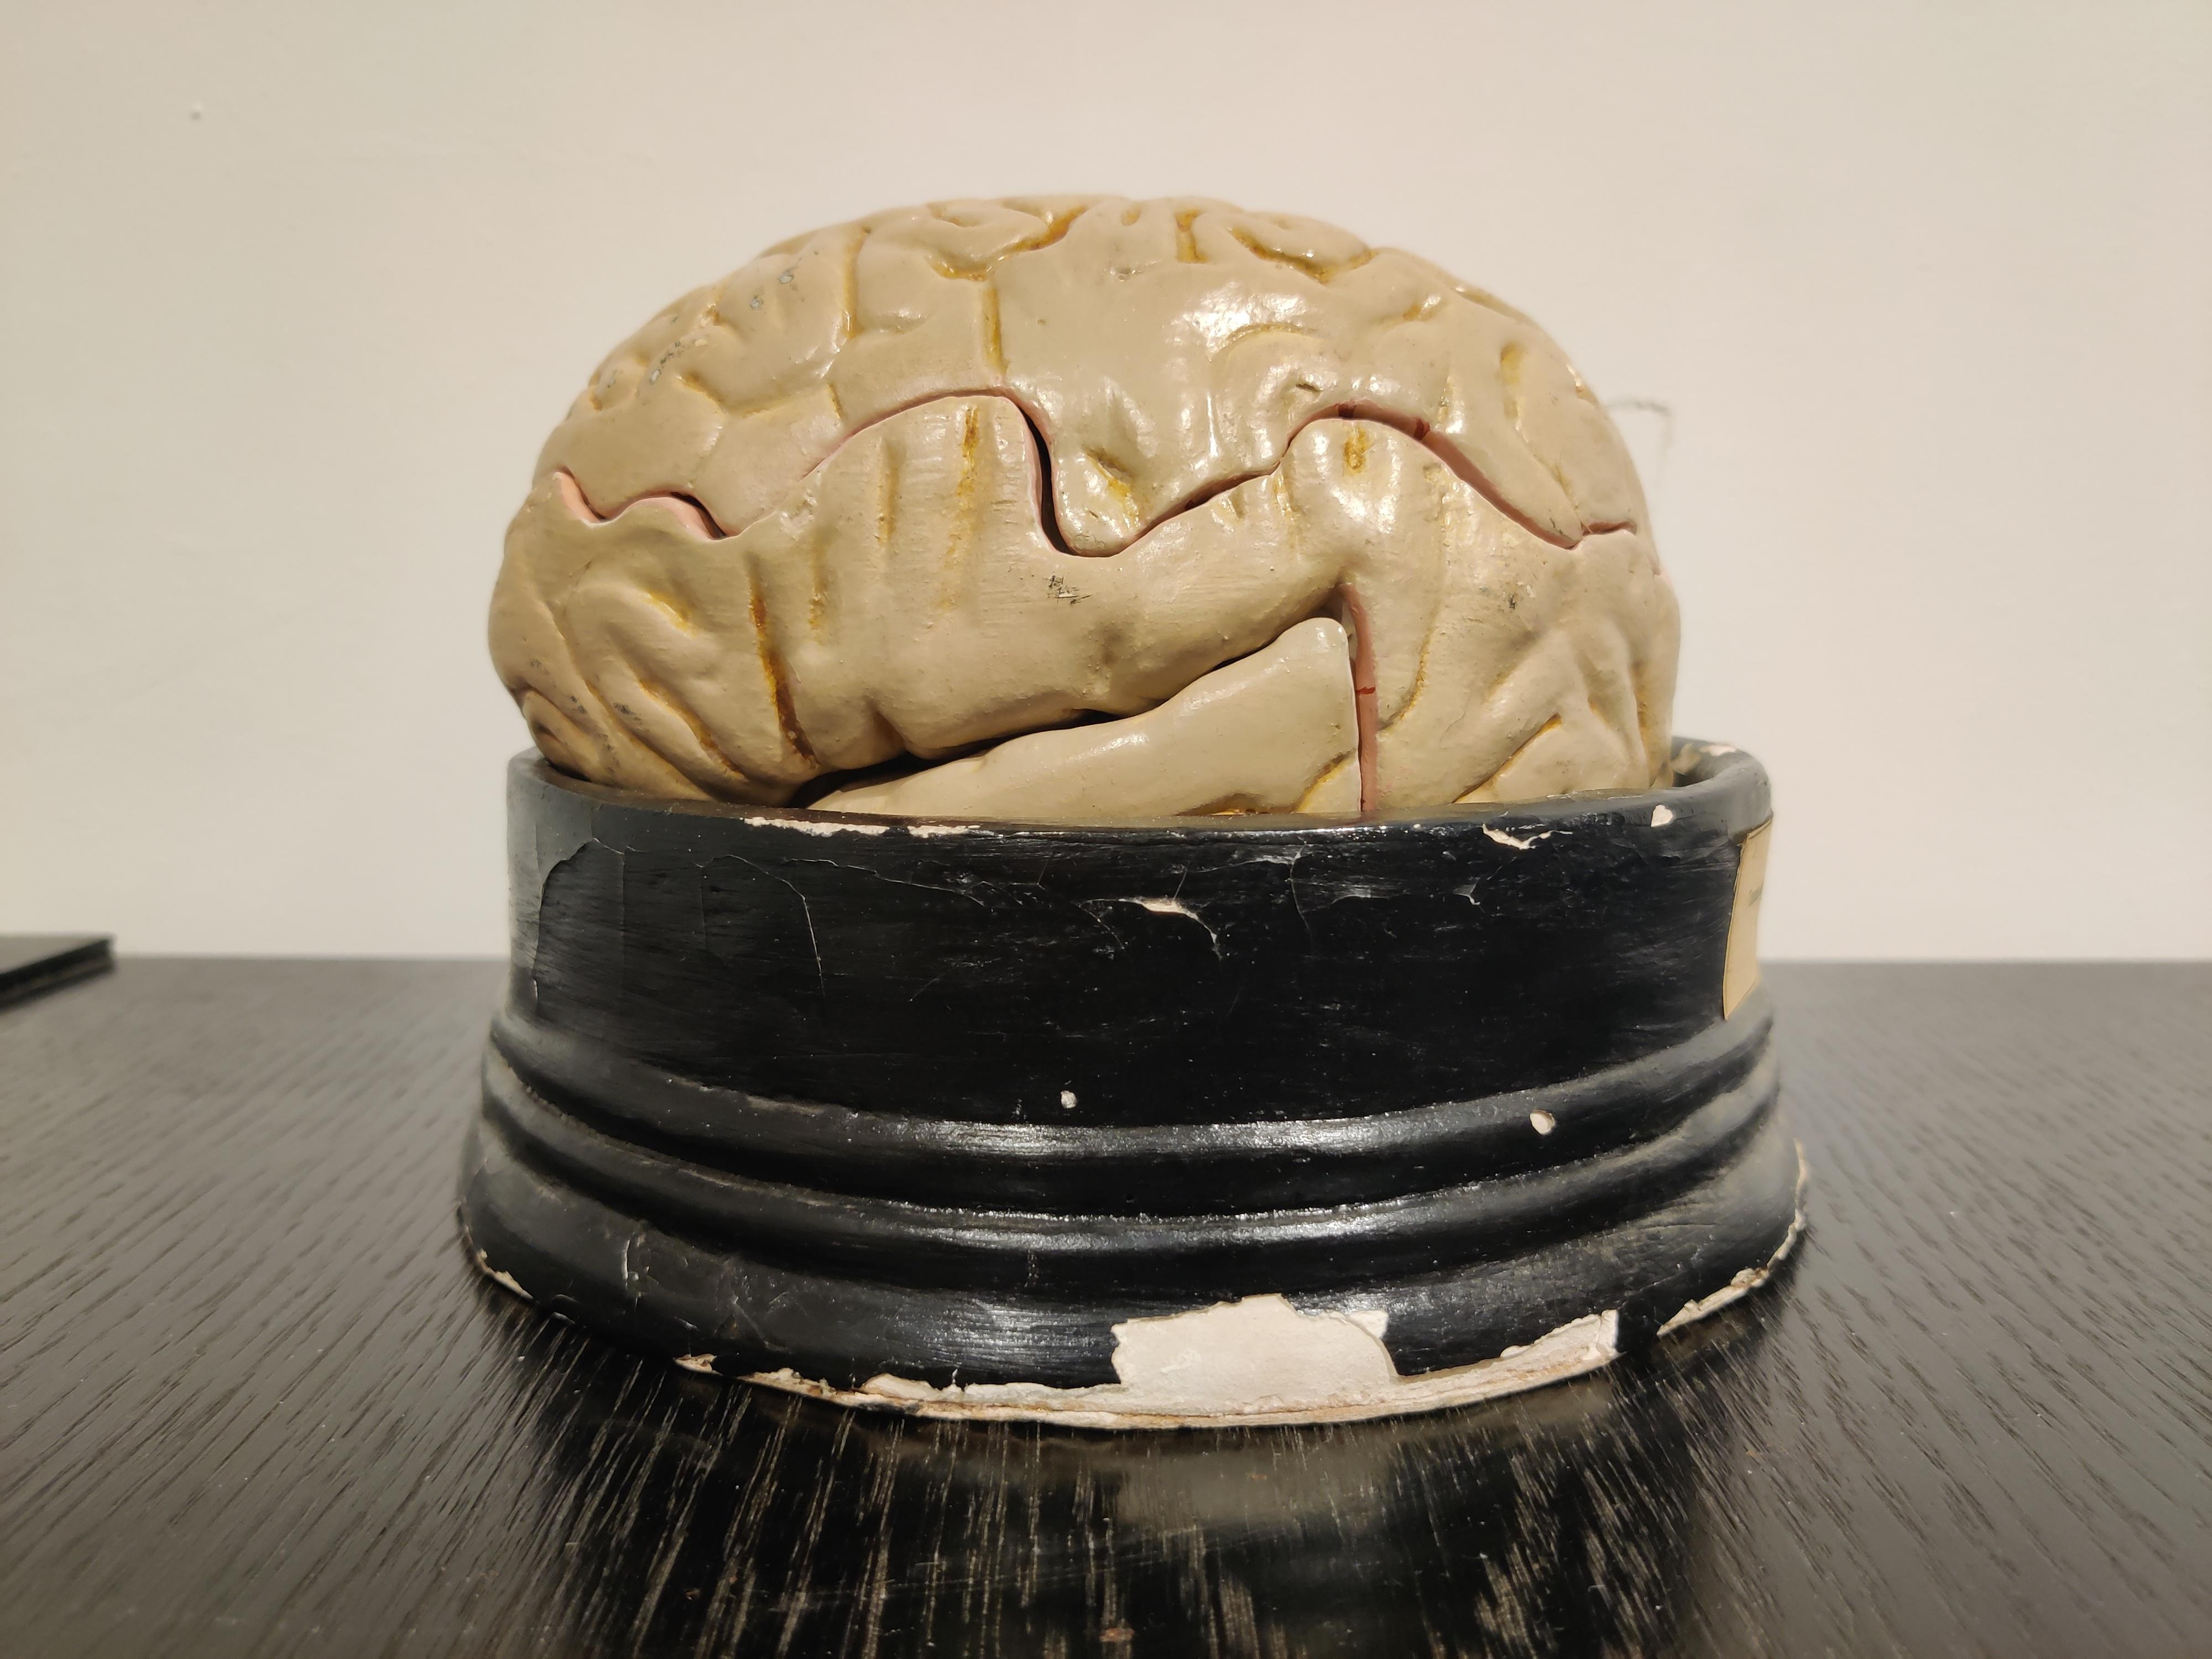 Latvian Anatomical Model of the Human Brain, 1950s